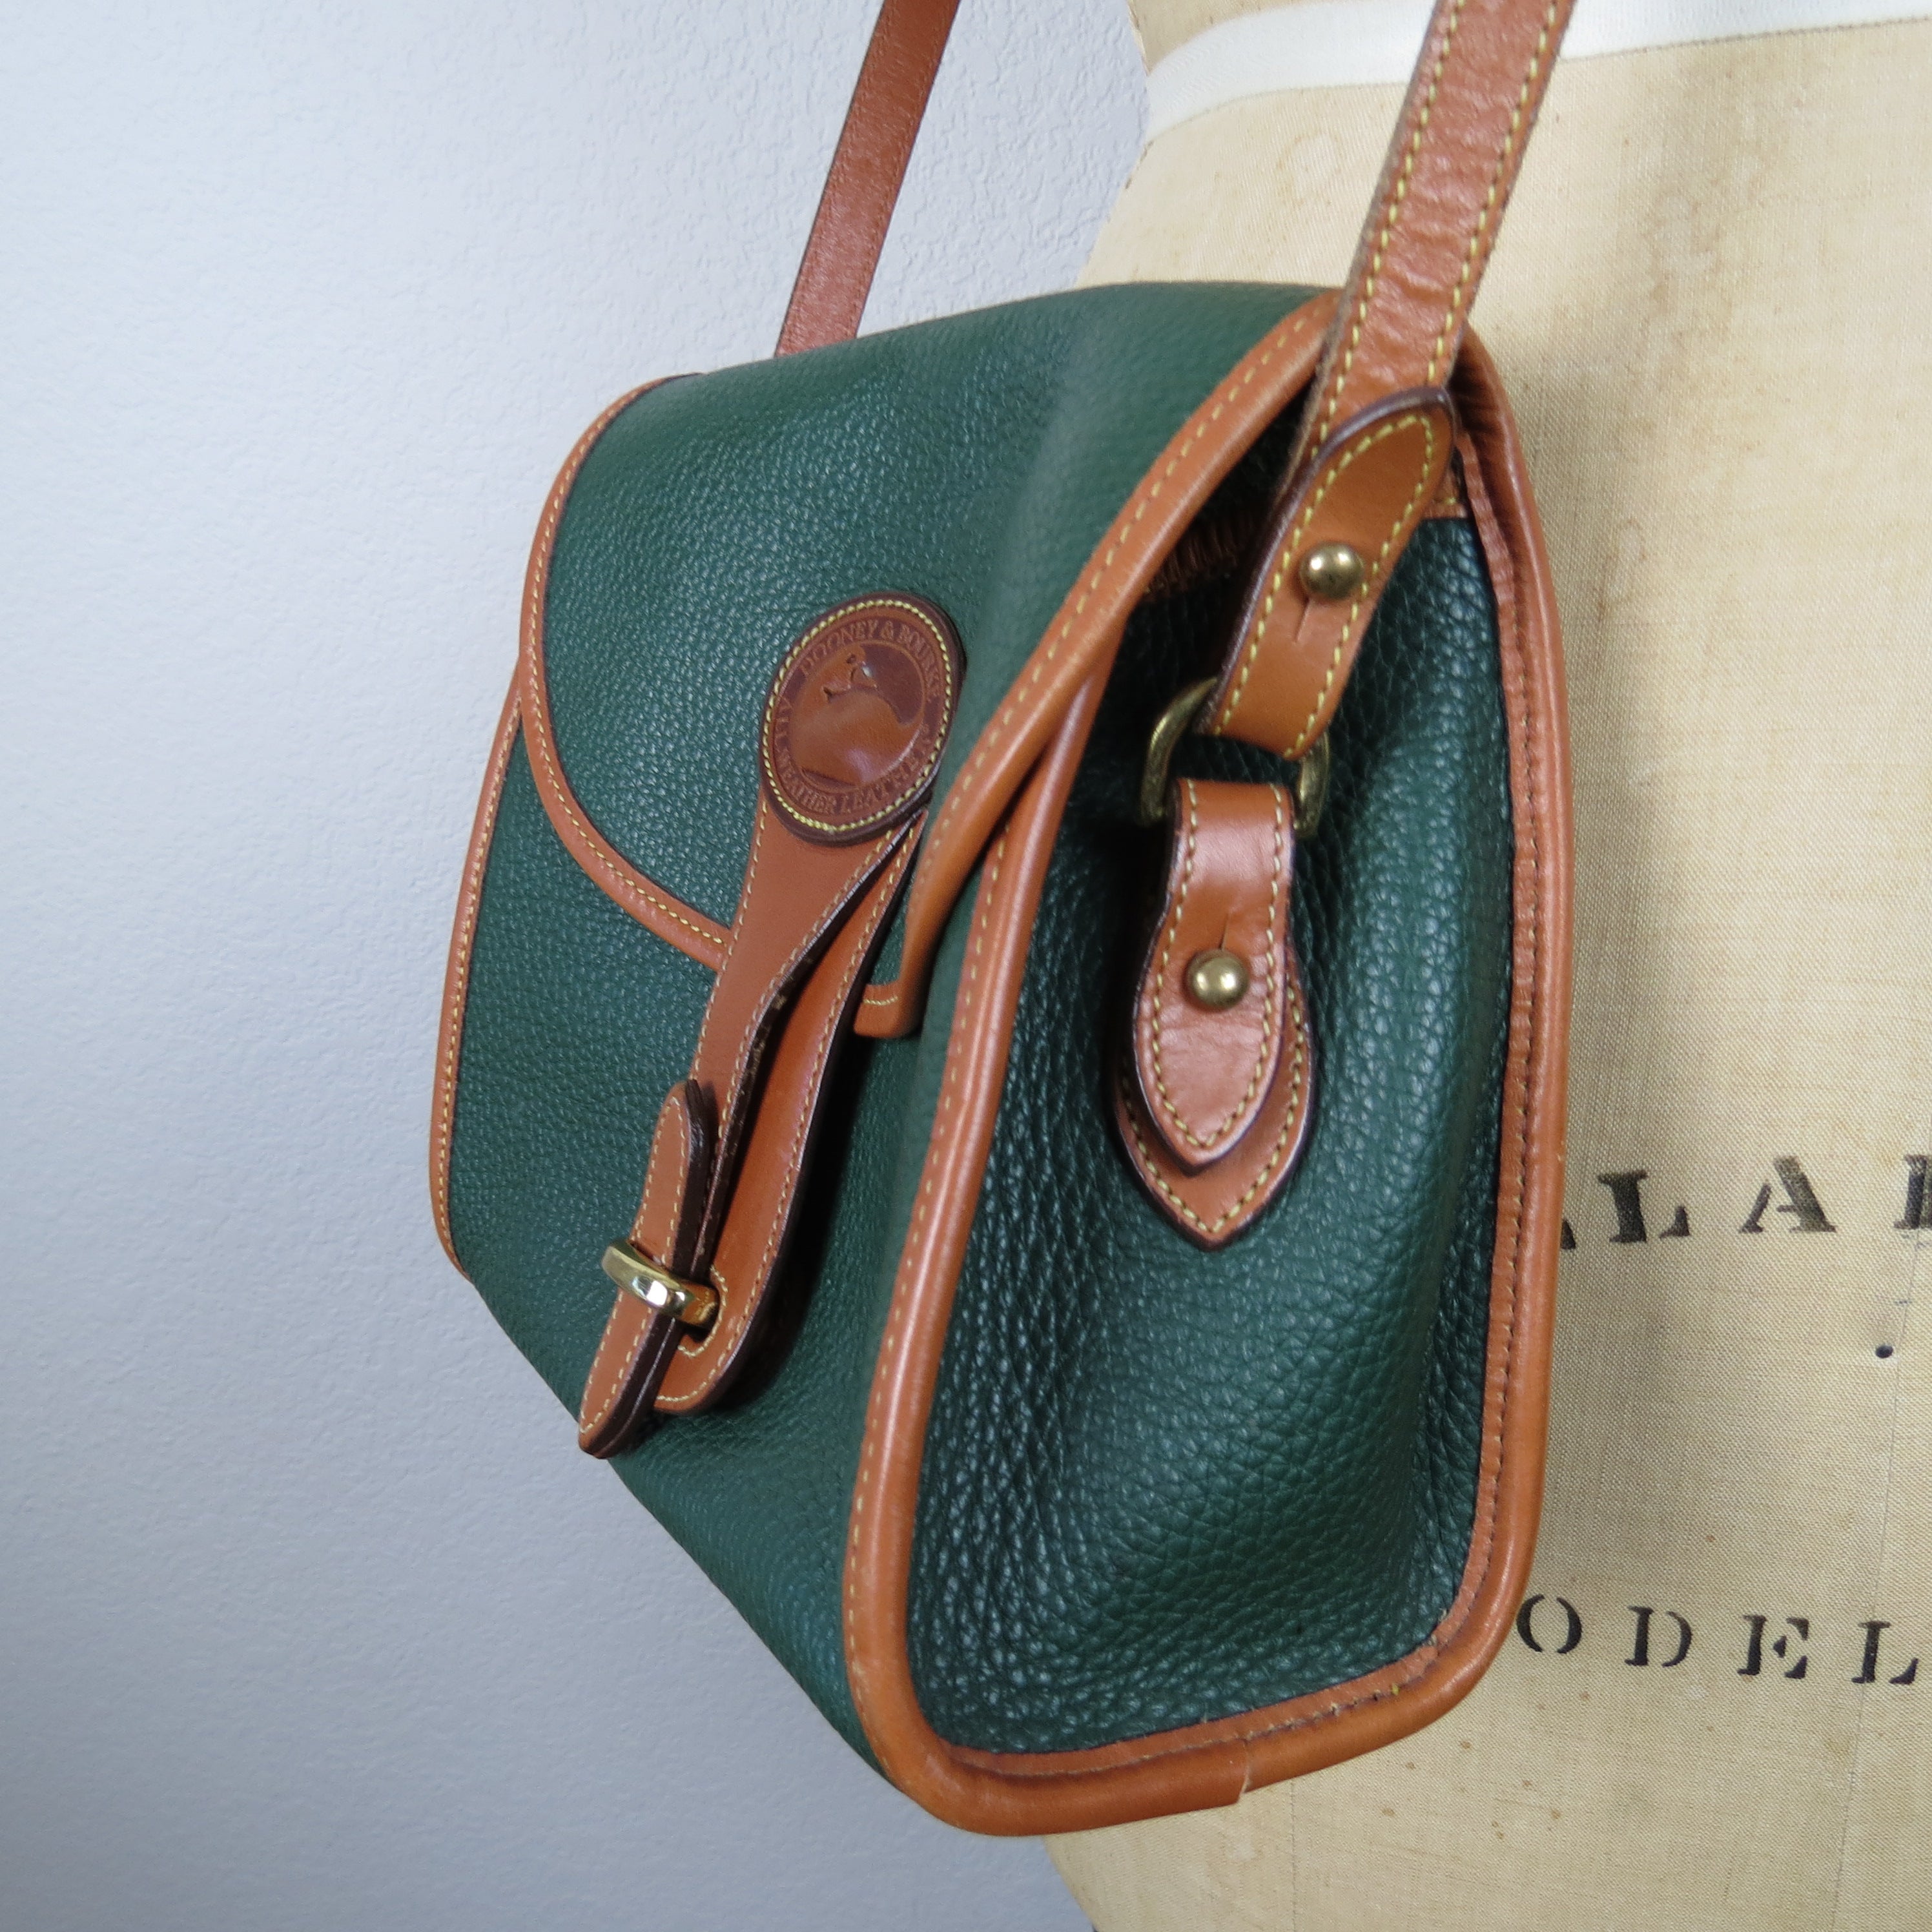 Vintage Dooney and Bourke Purse Handbag Leather Crossbody 